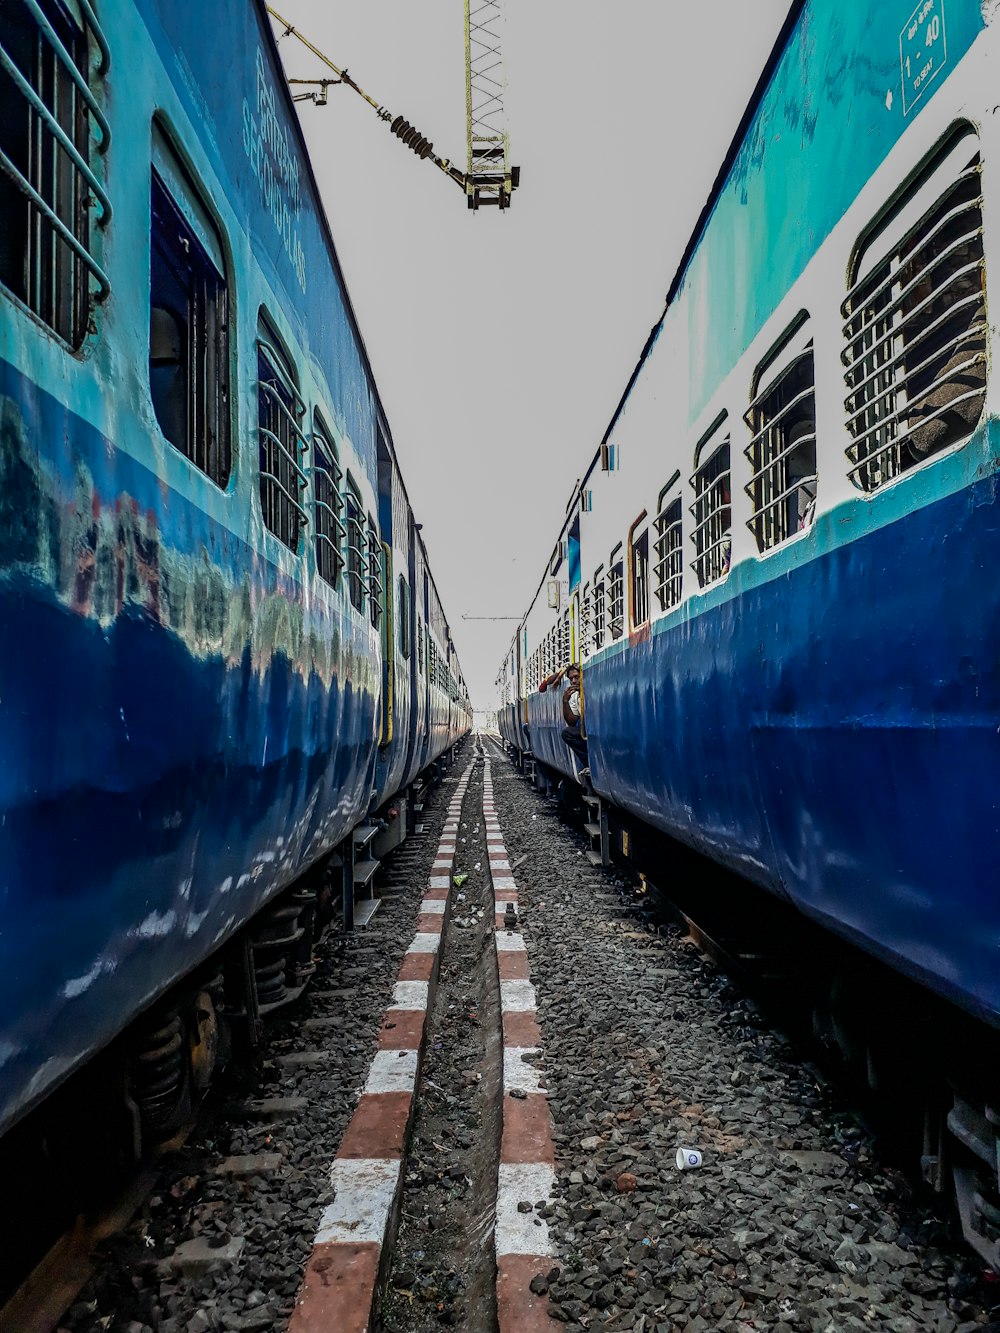 blue and white train on rail tracks